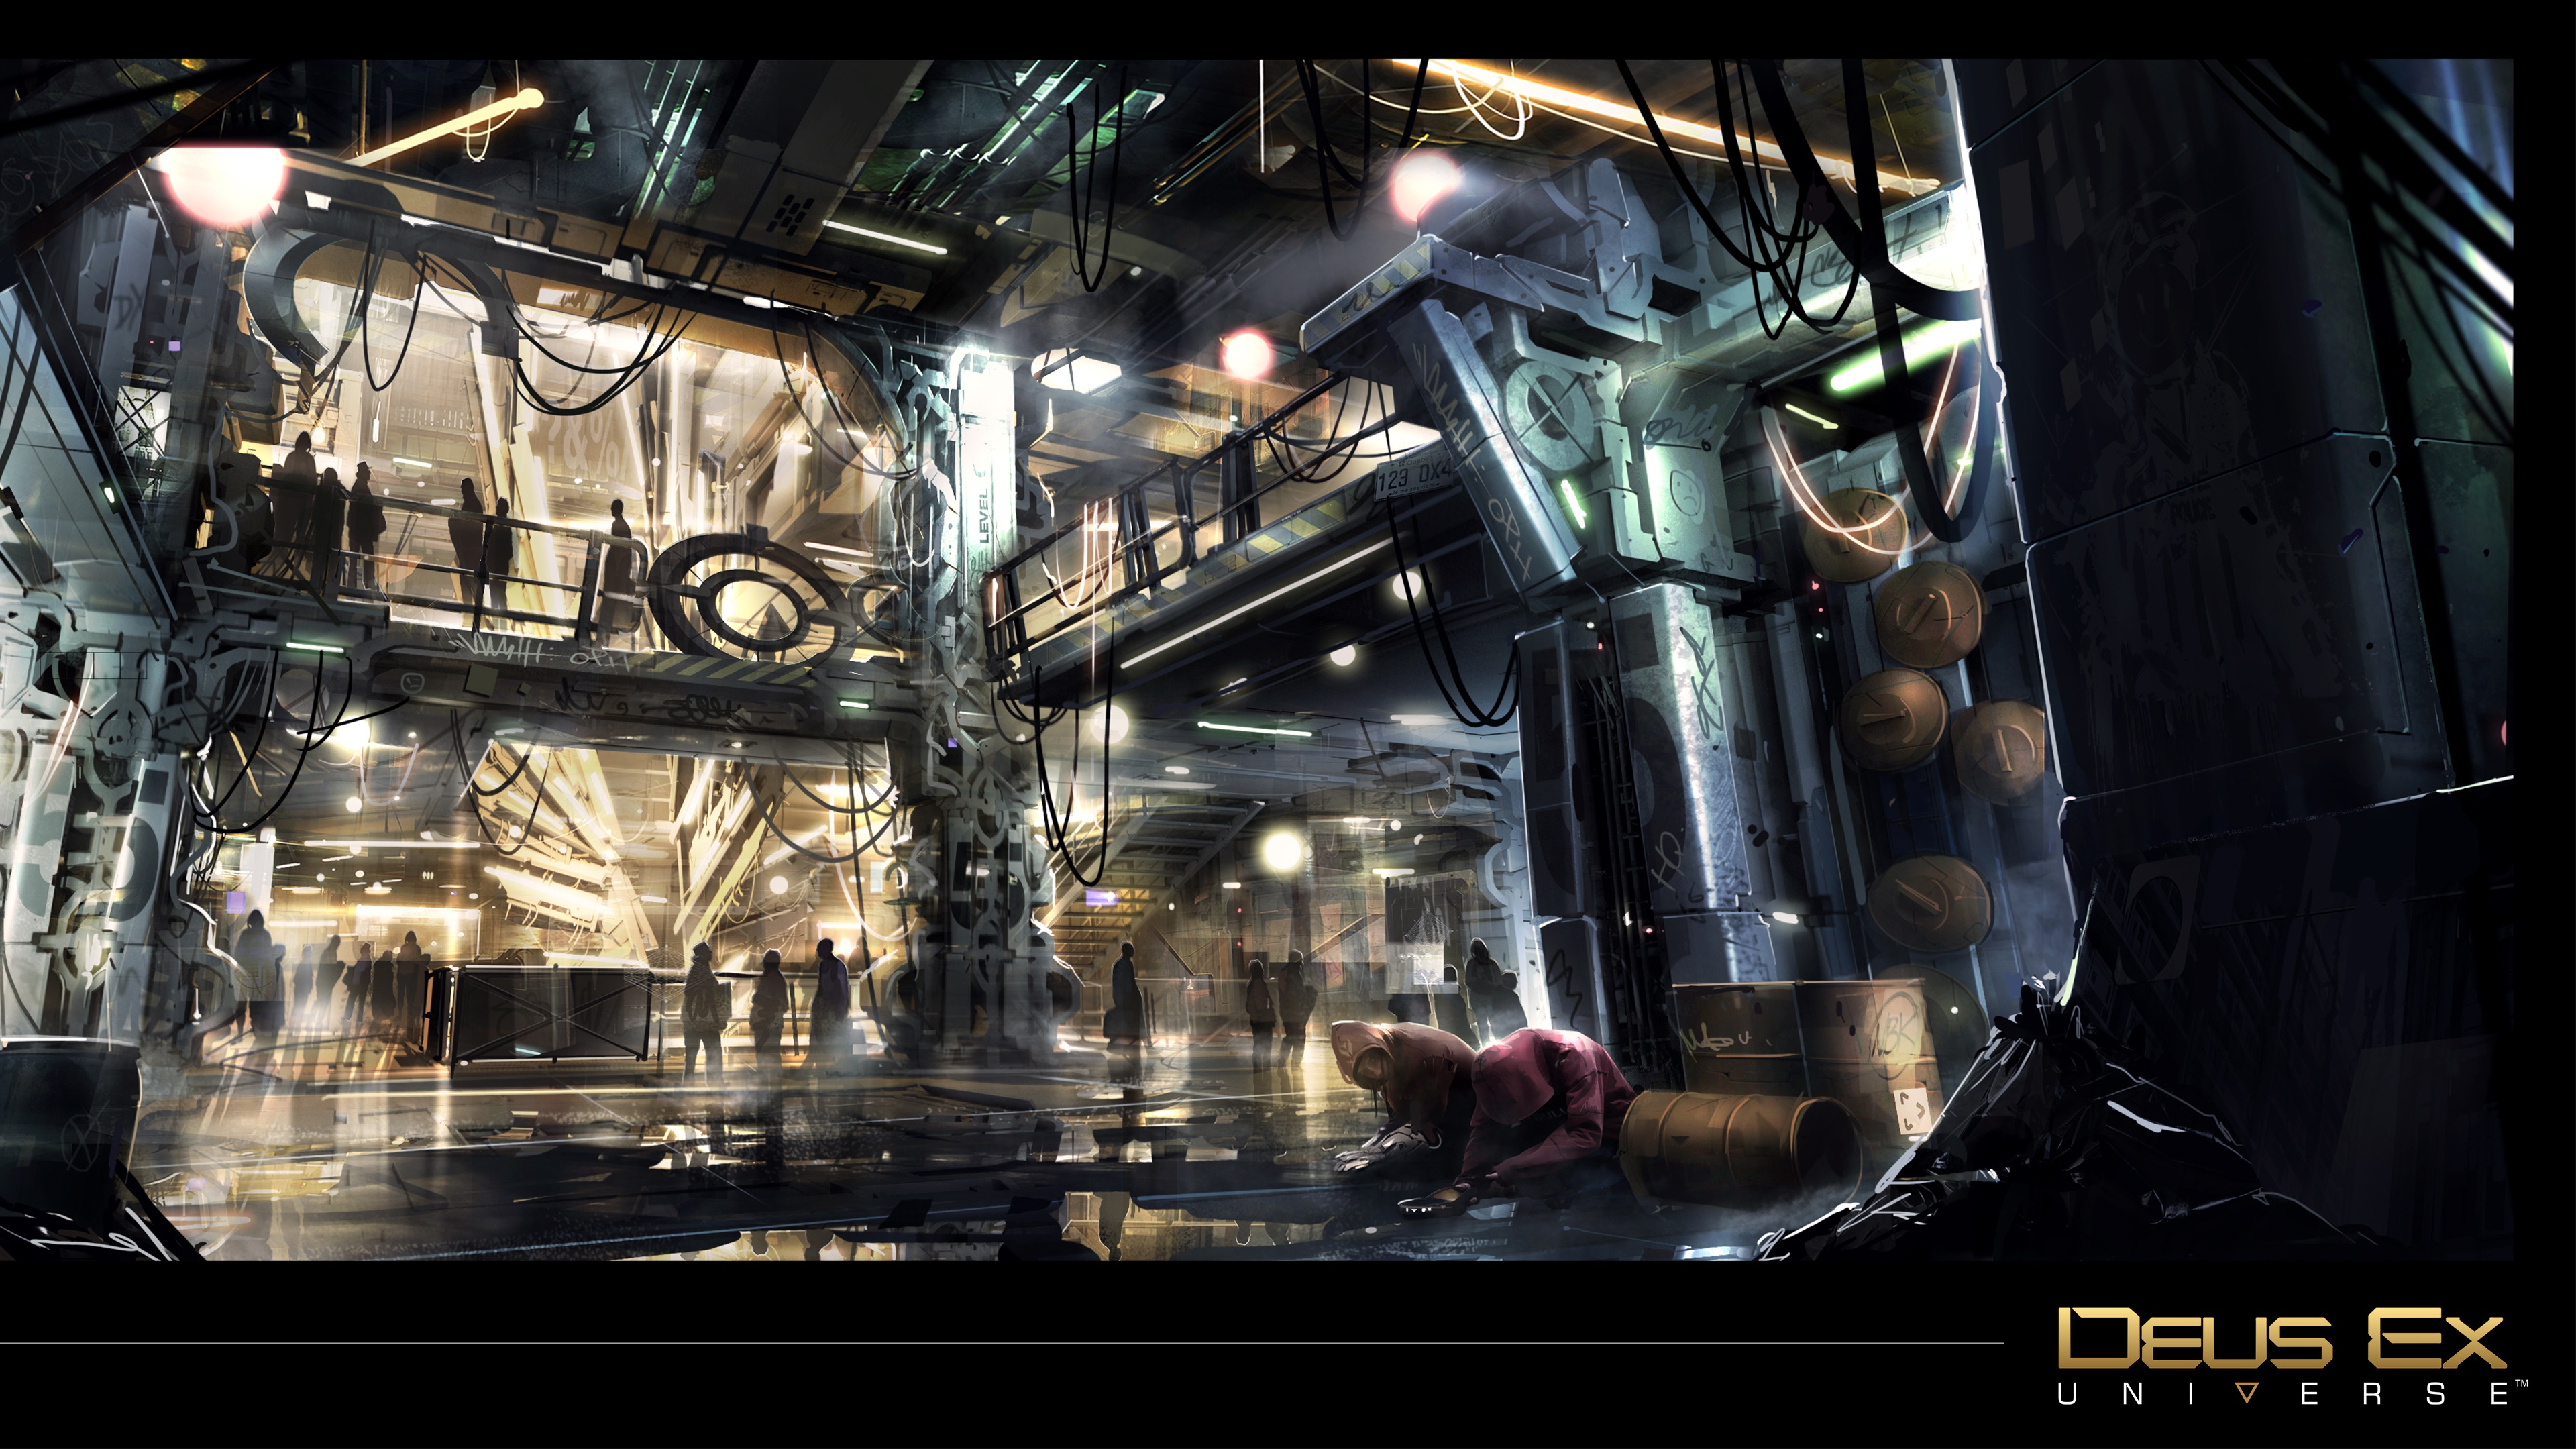 Deus Ex Mankind Divided Wallpaper in jpg format for free